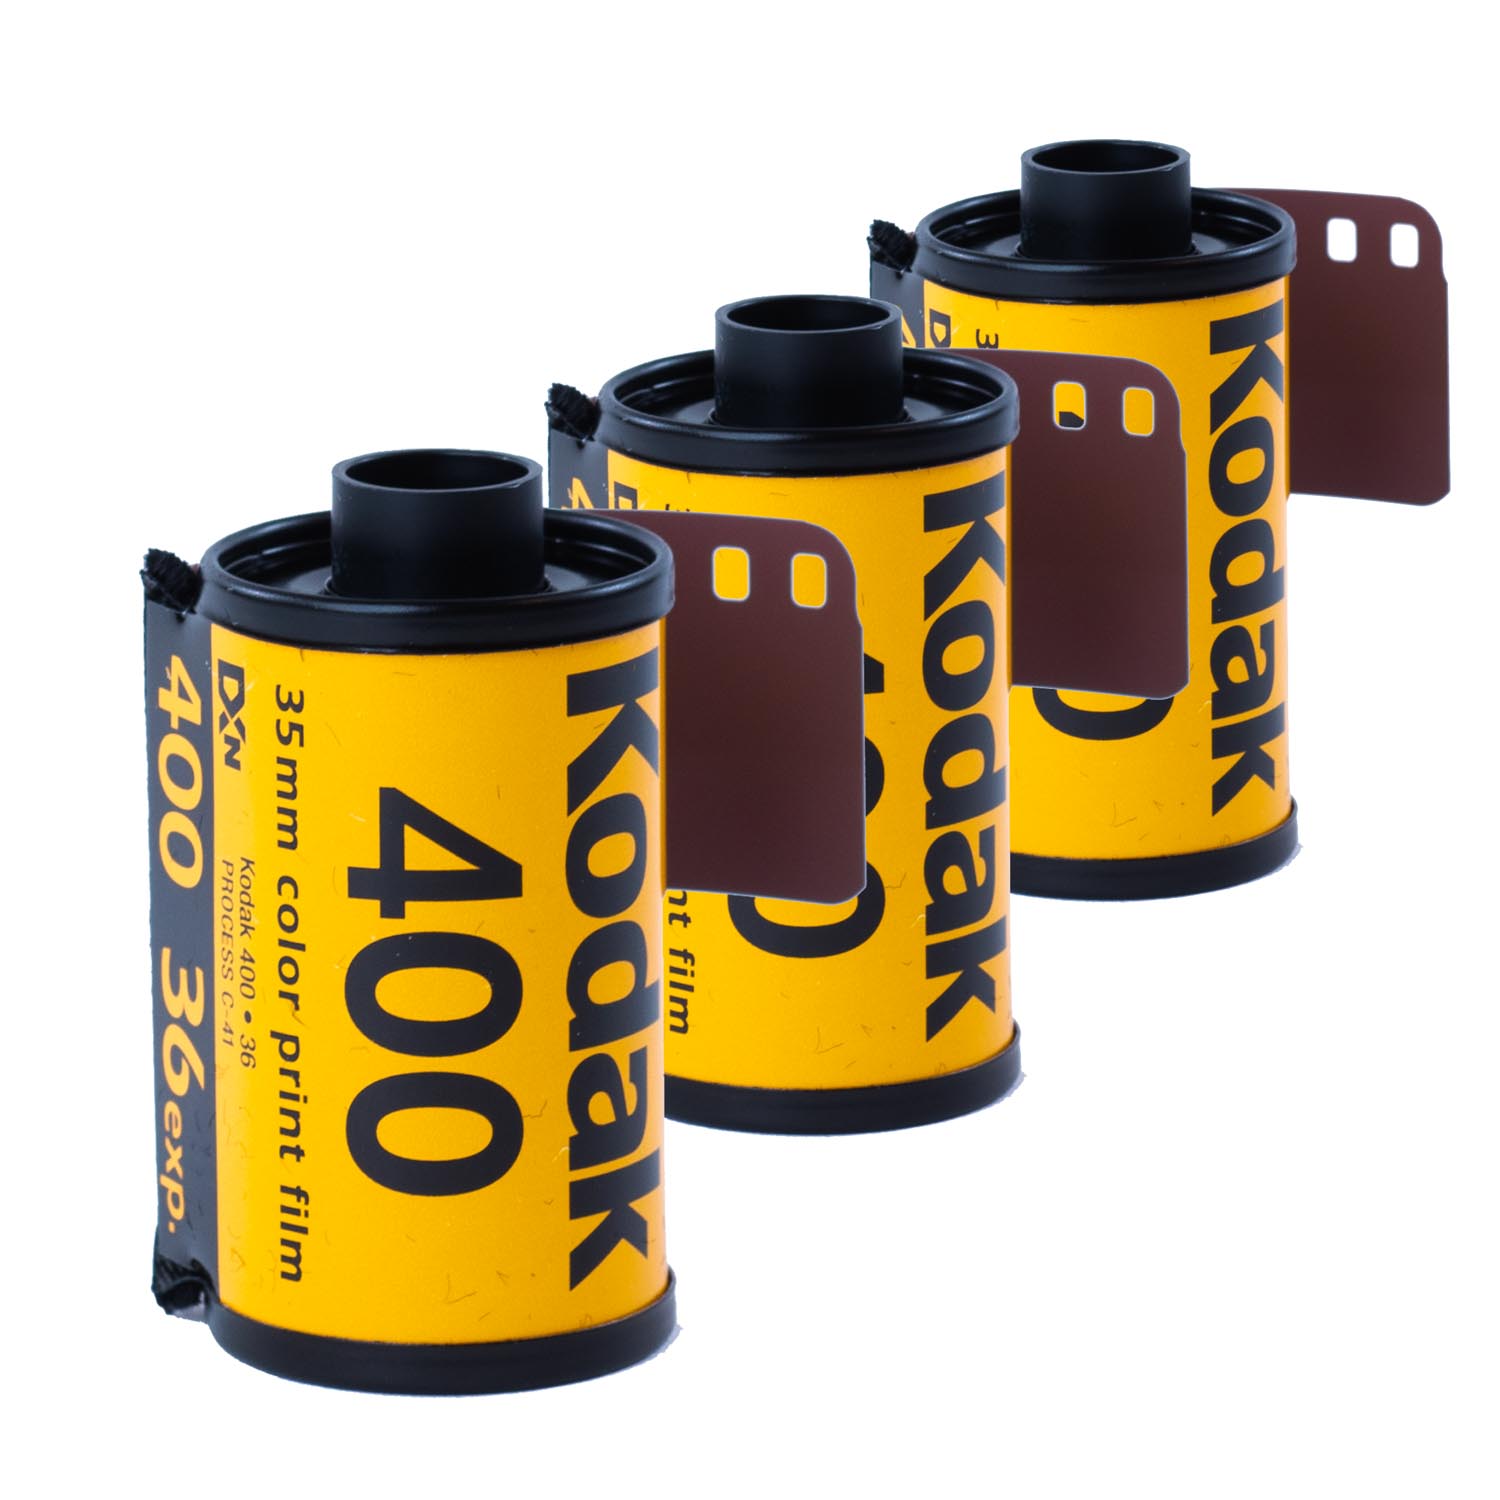 TThumbnail image for Kodak Ultramax 400 - 135-36 (3 rolls)